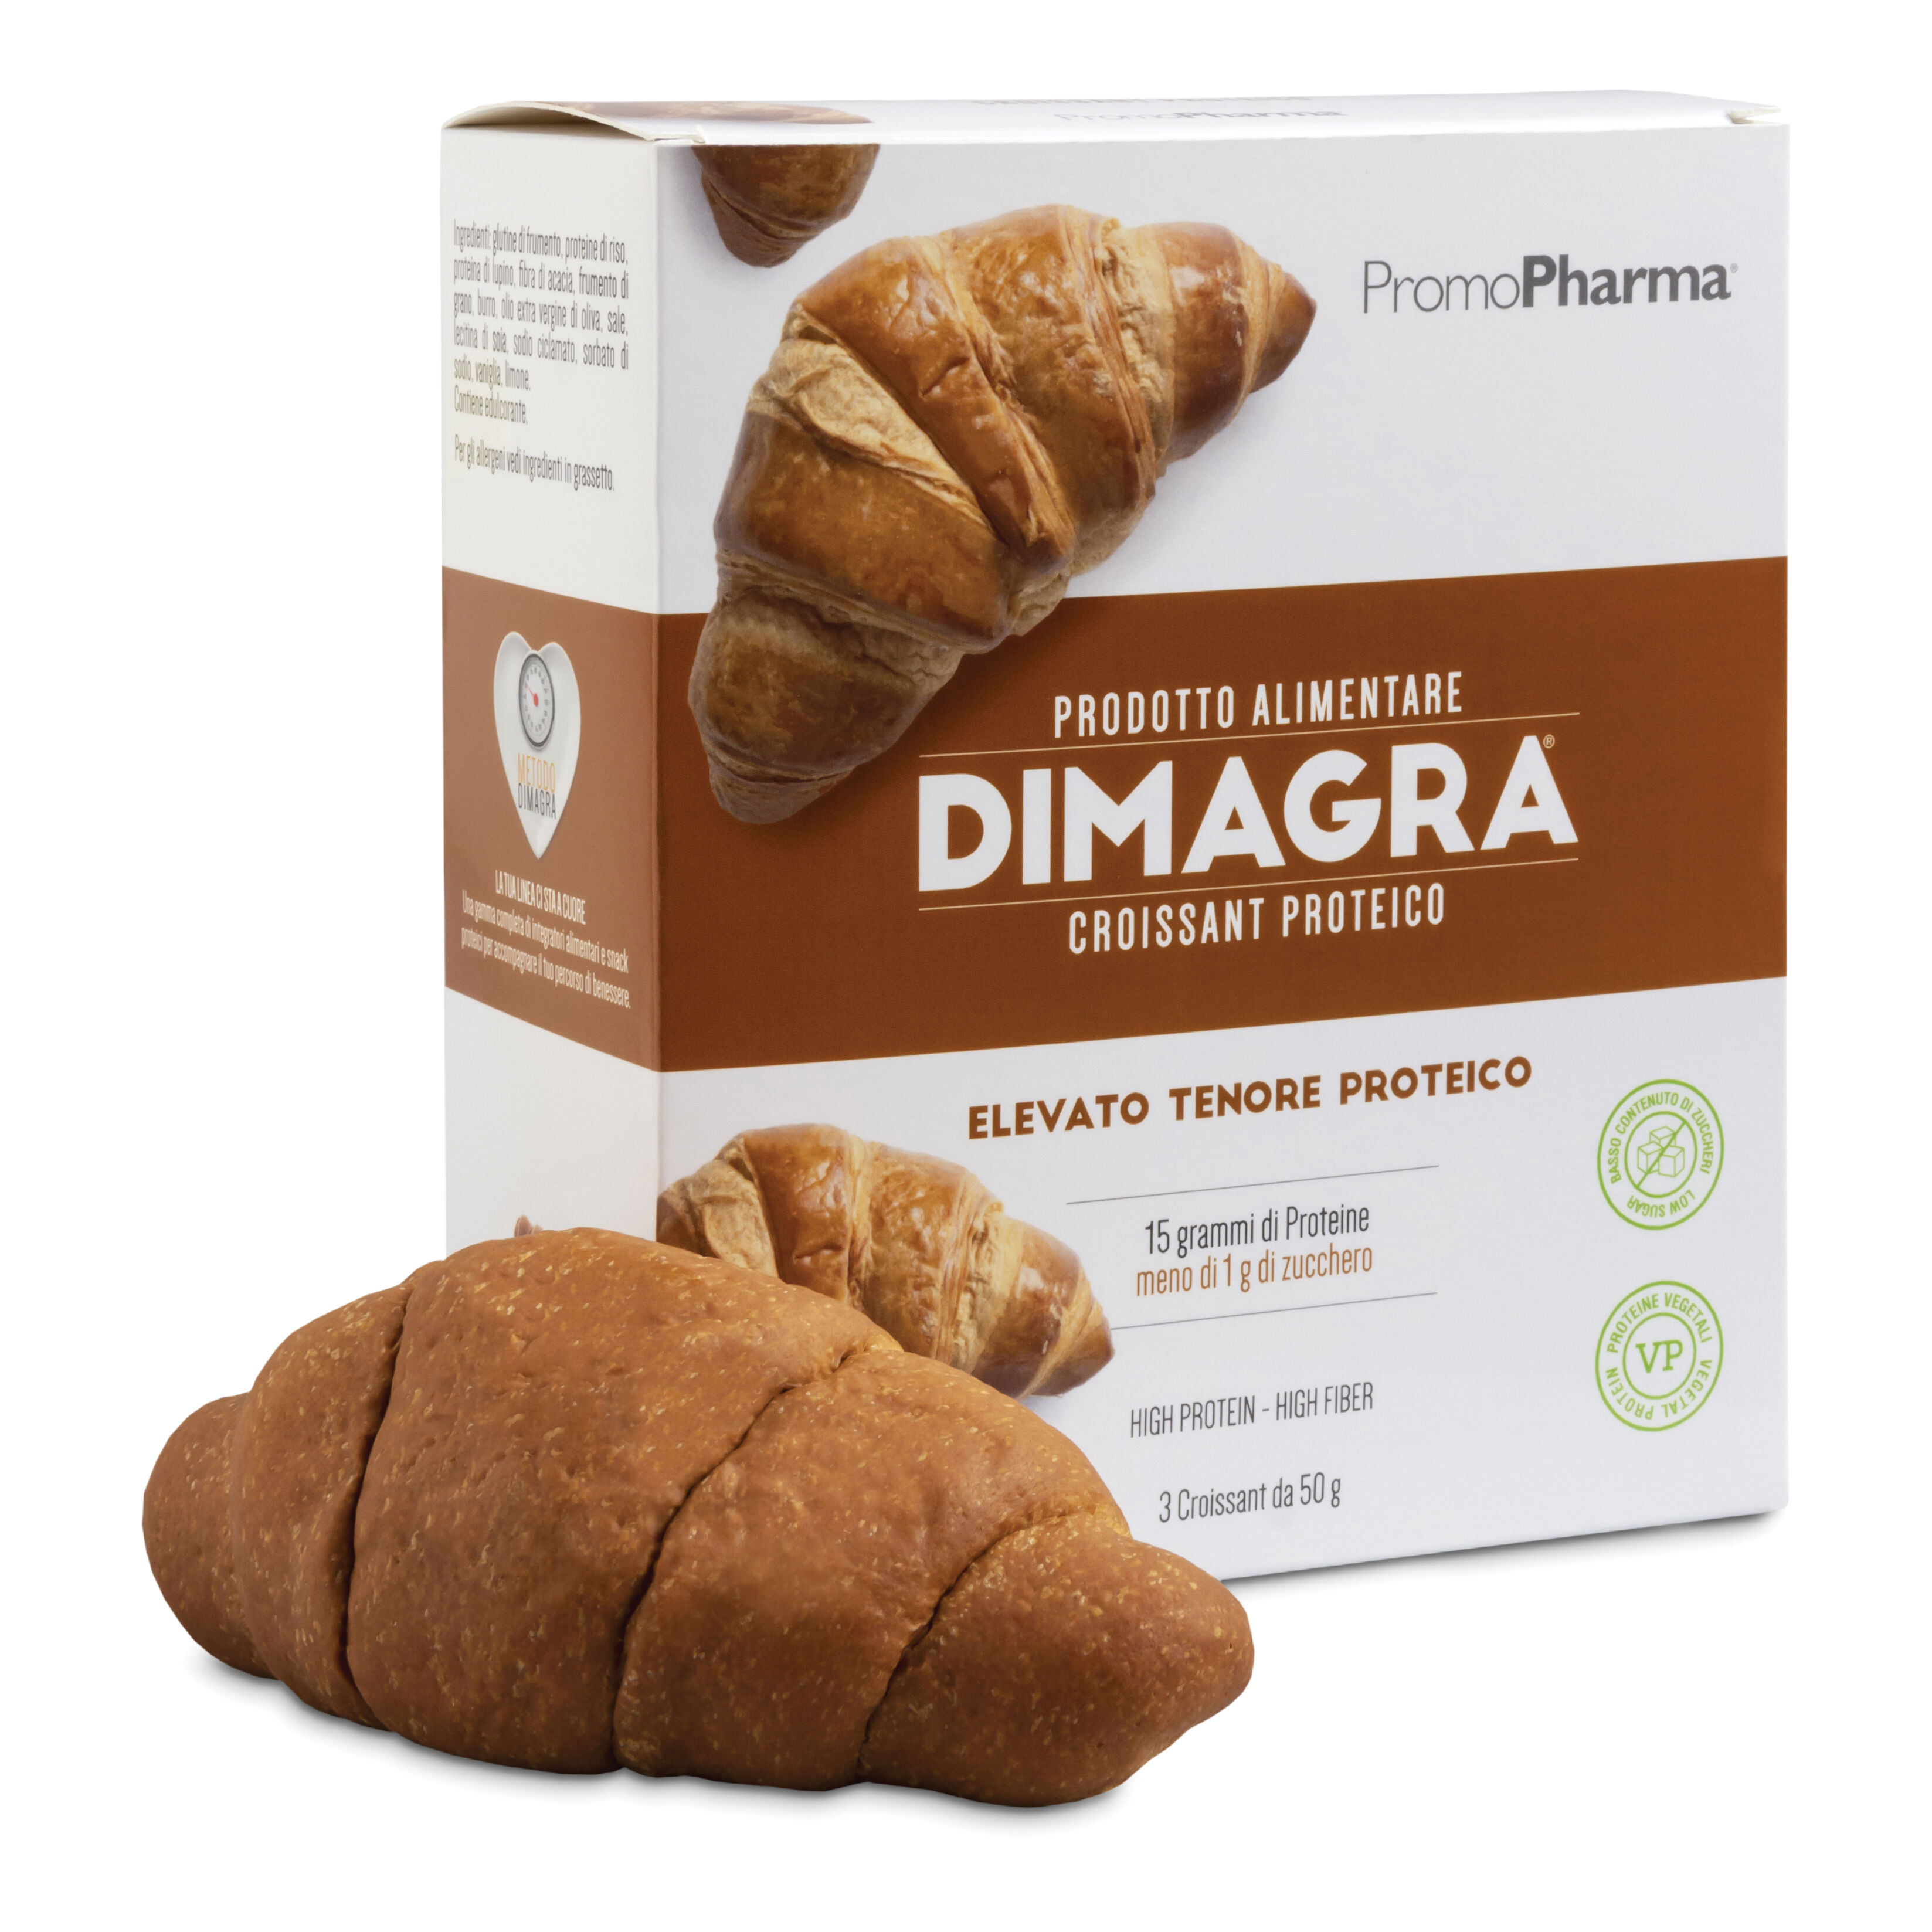 PROMOPHARMA SpA Dimagra croissant proteico 3 pz da 50 g